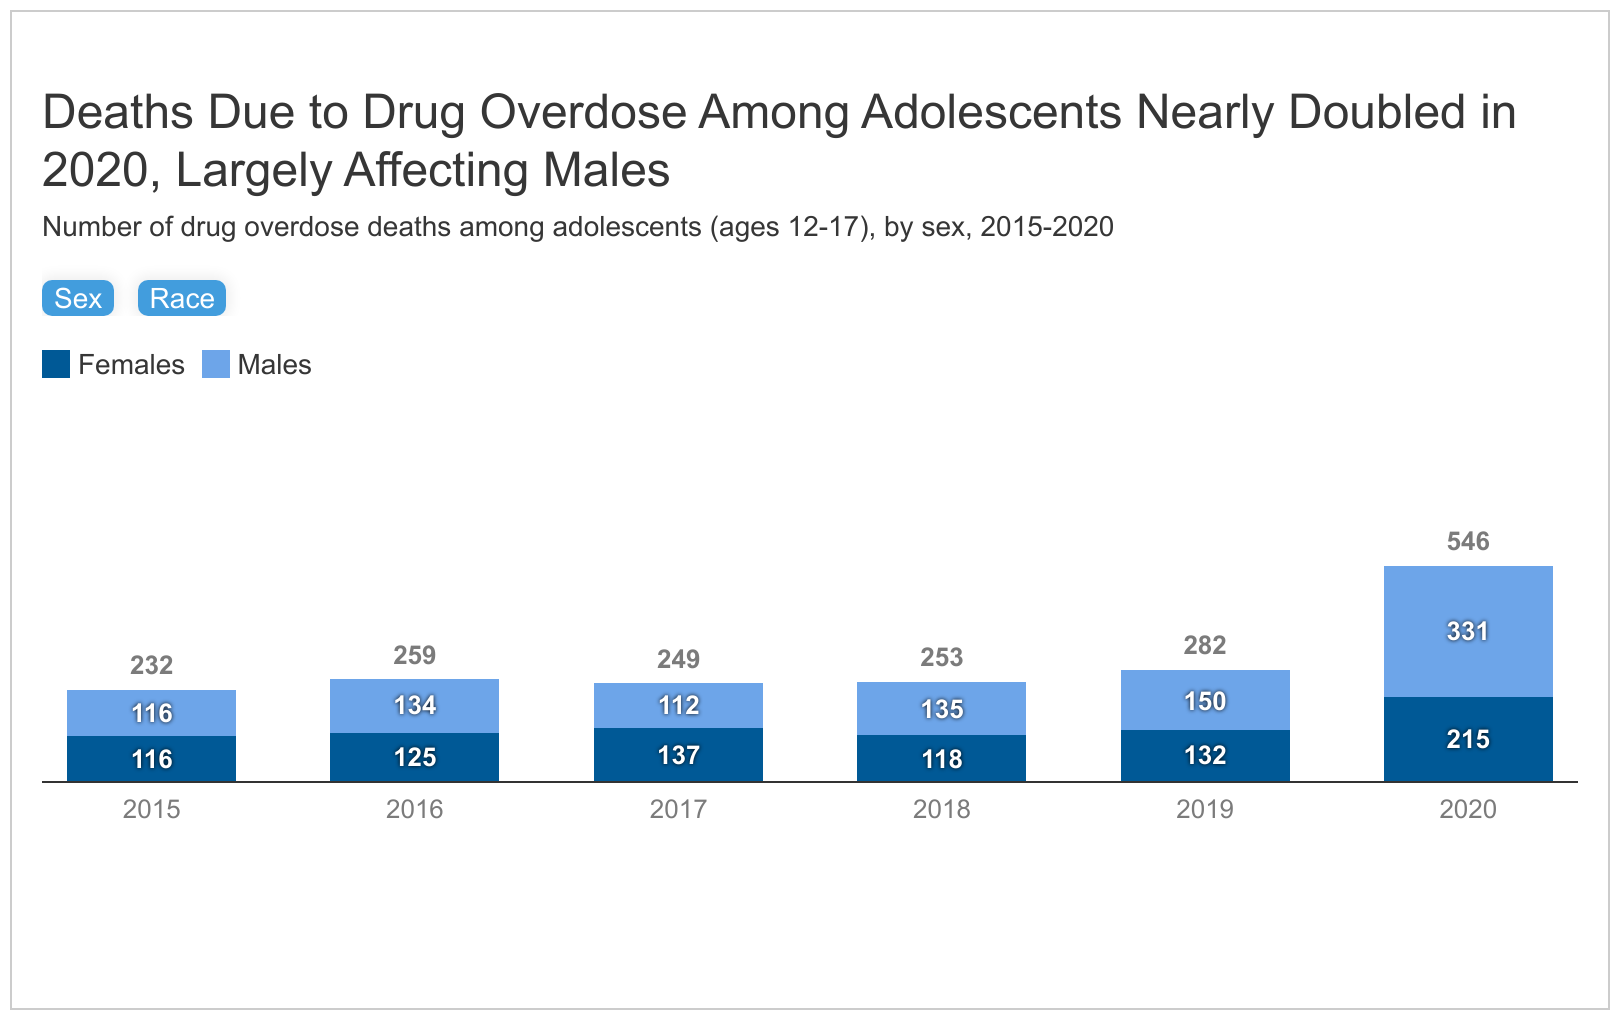 prescription drug abuse among rural teens